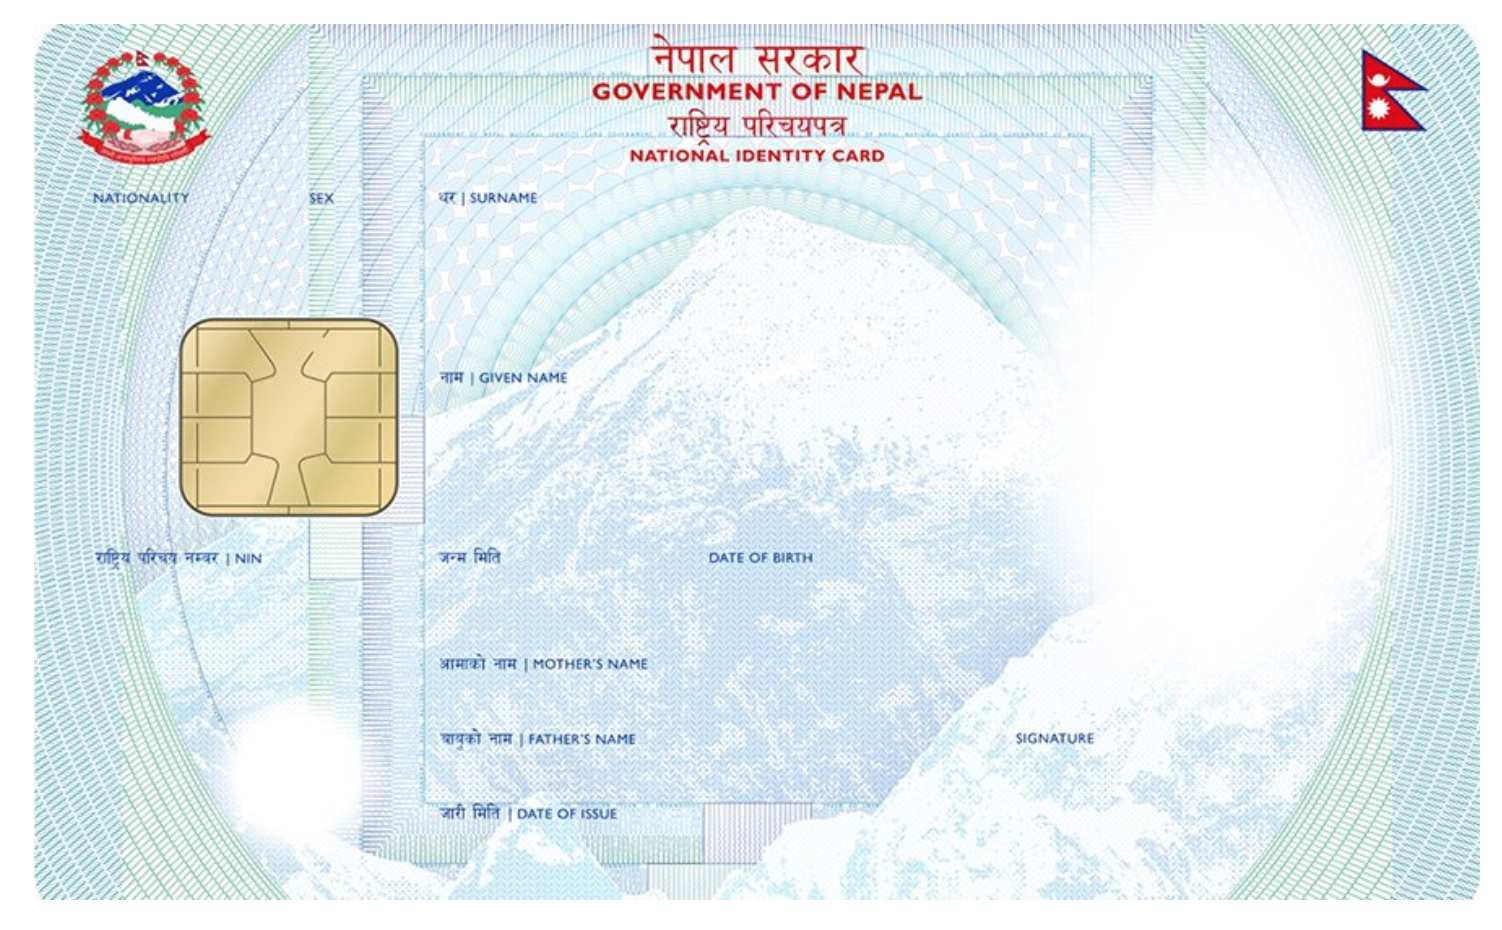 National Identity Card (Nepal).